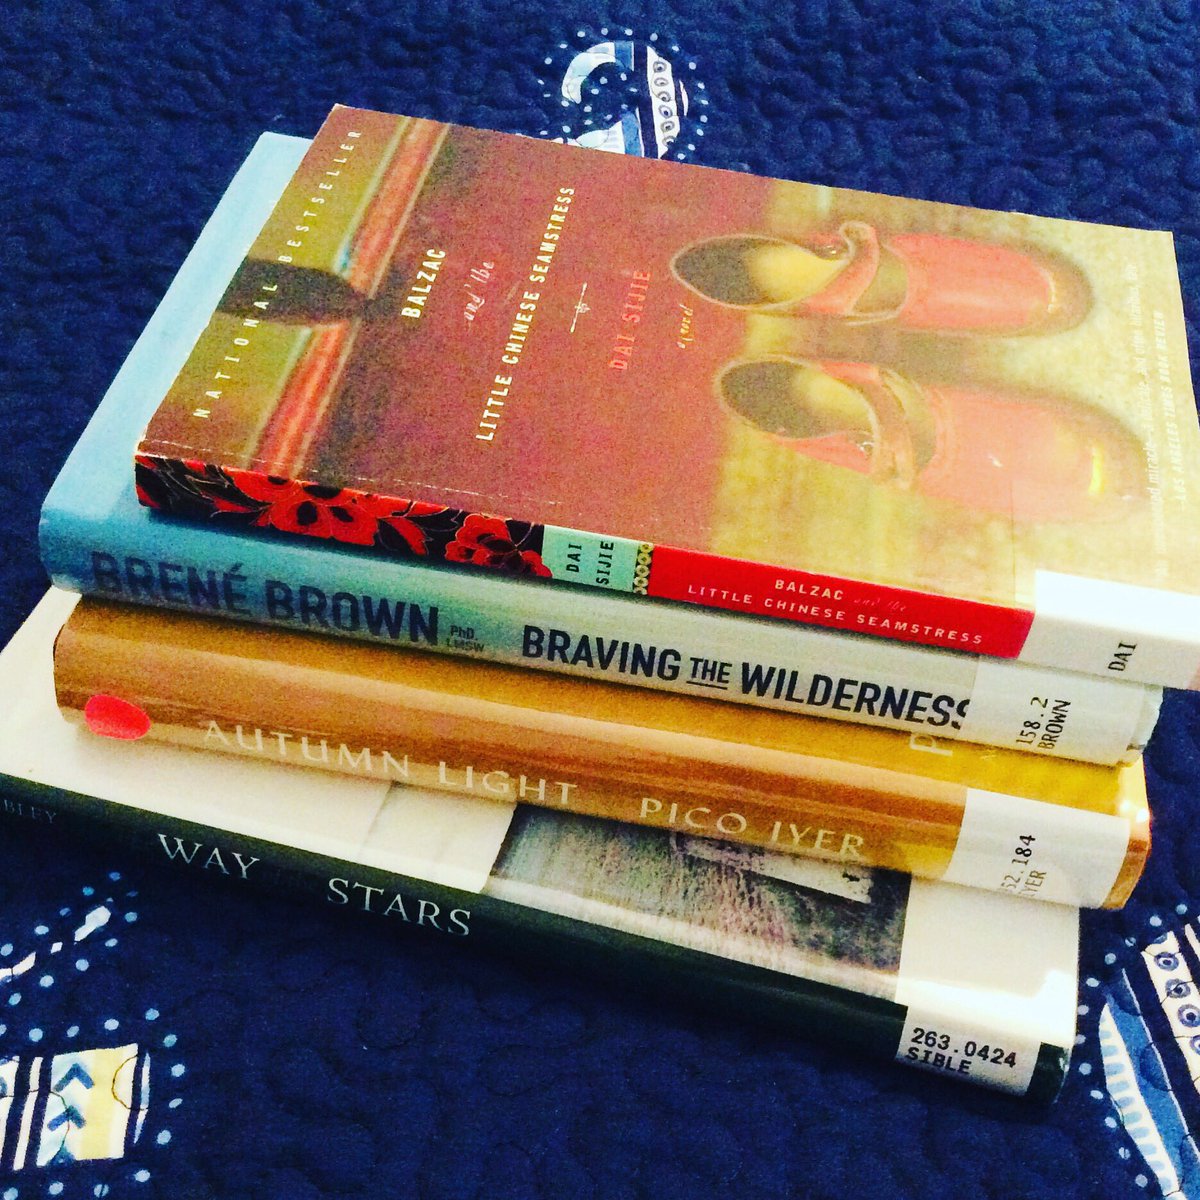 Pick of the week 

#bookstagram #booksofinstagram #bookstagrammer #instabooks #daisijie #brenebrown #picoiyer #robertsibley #forsythpubliclibrary #reminiscingthereads